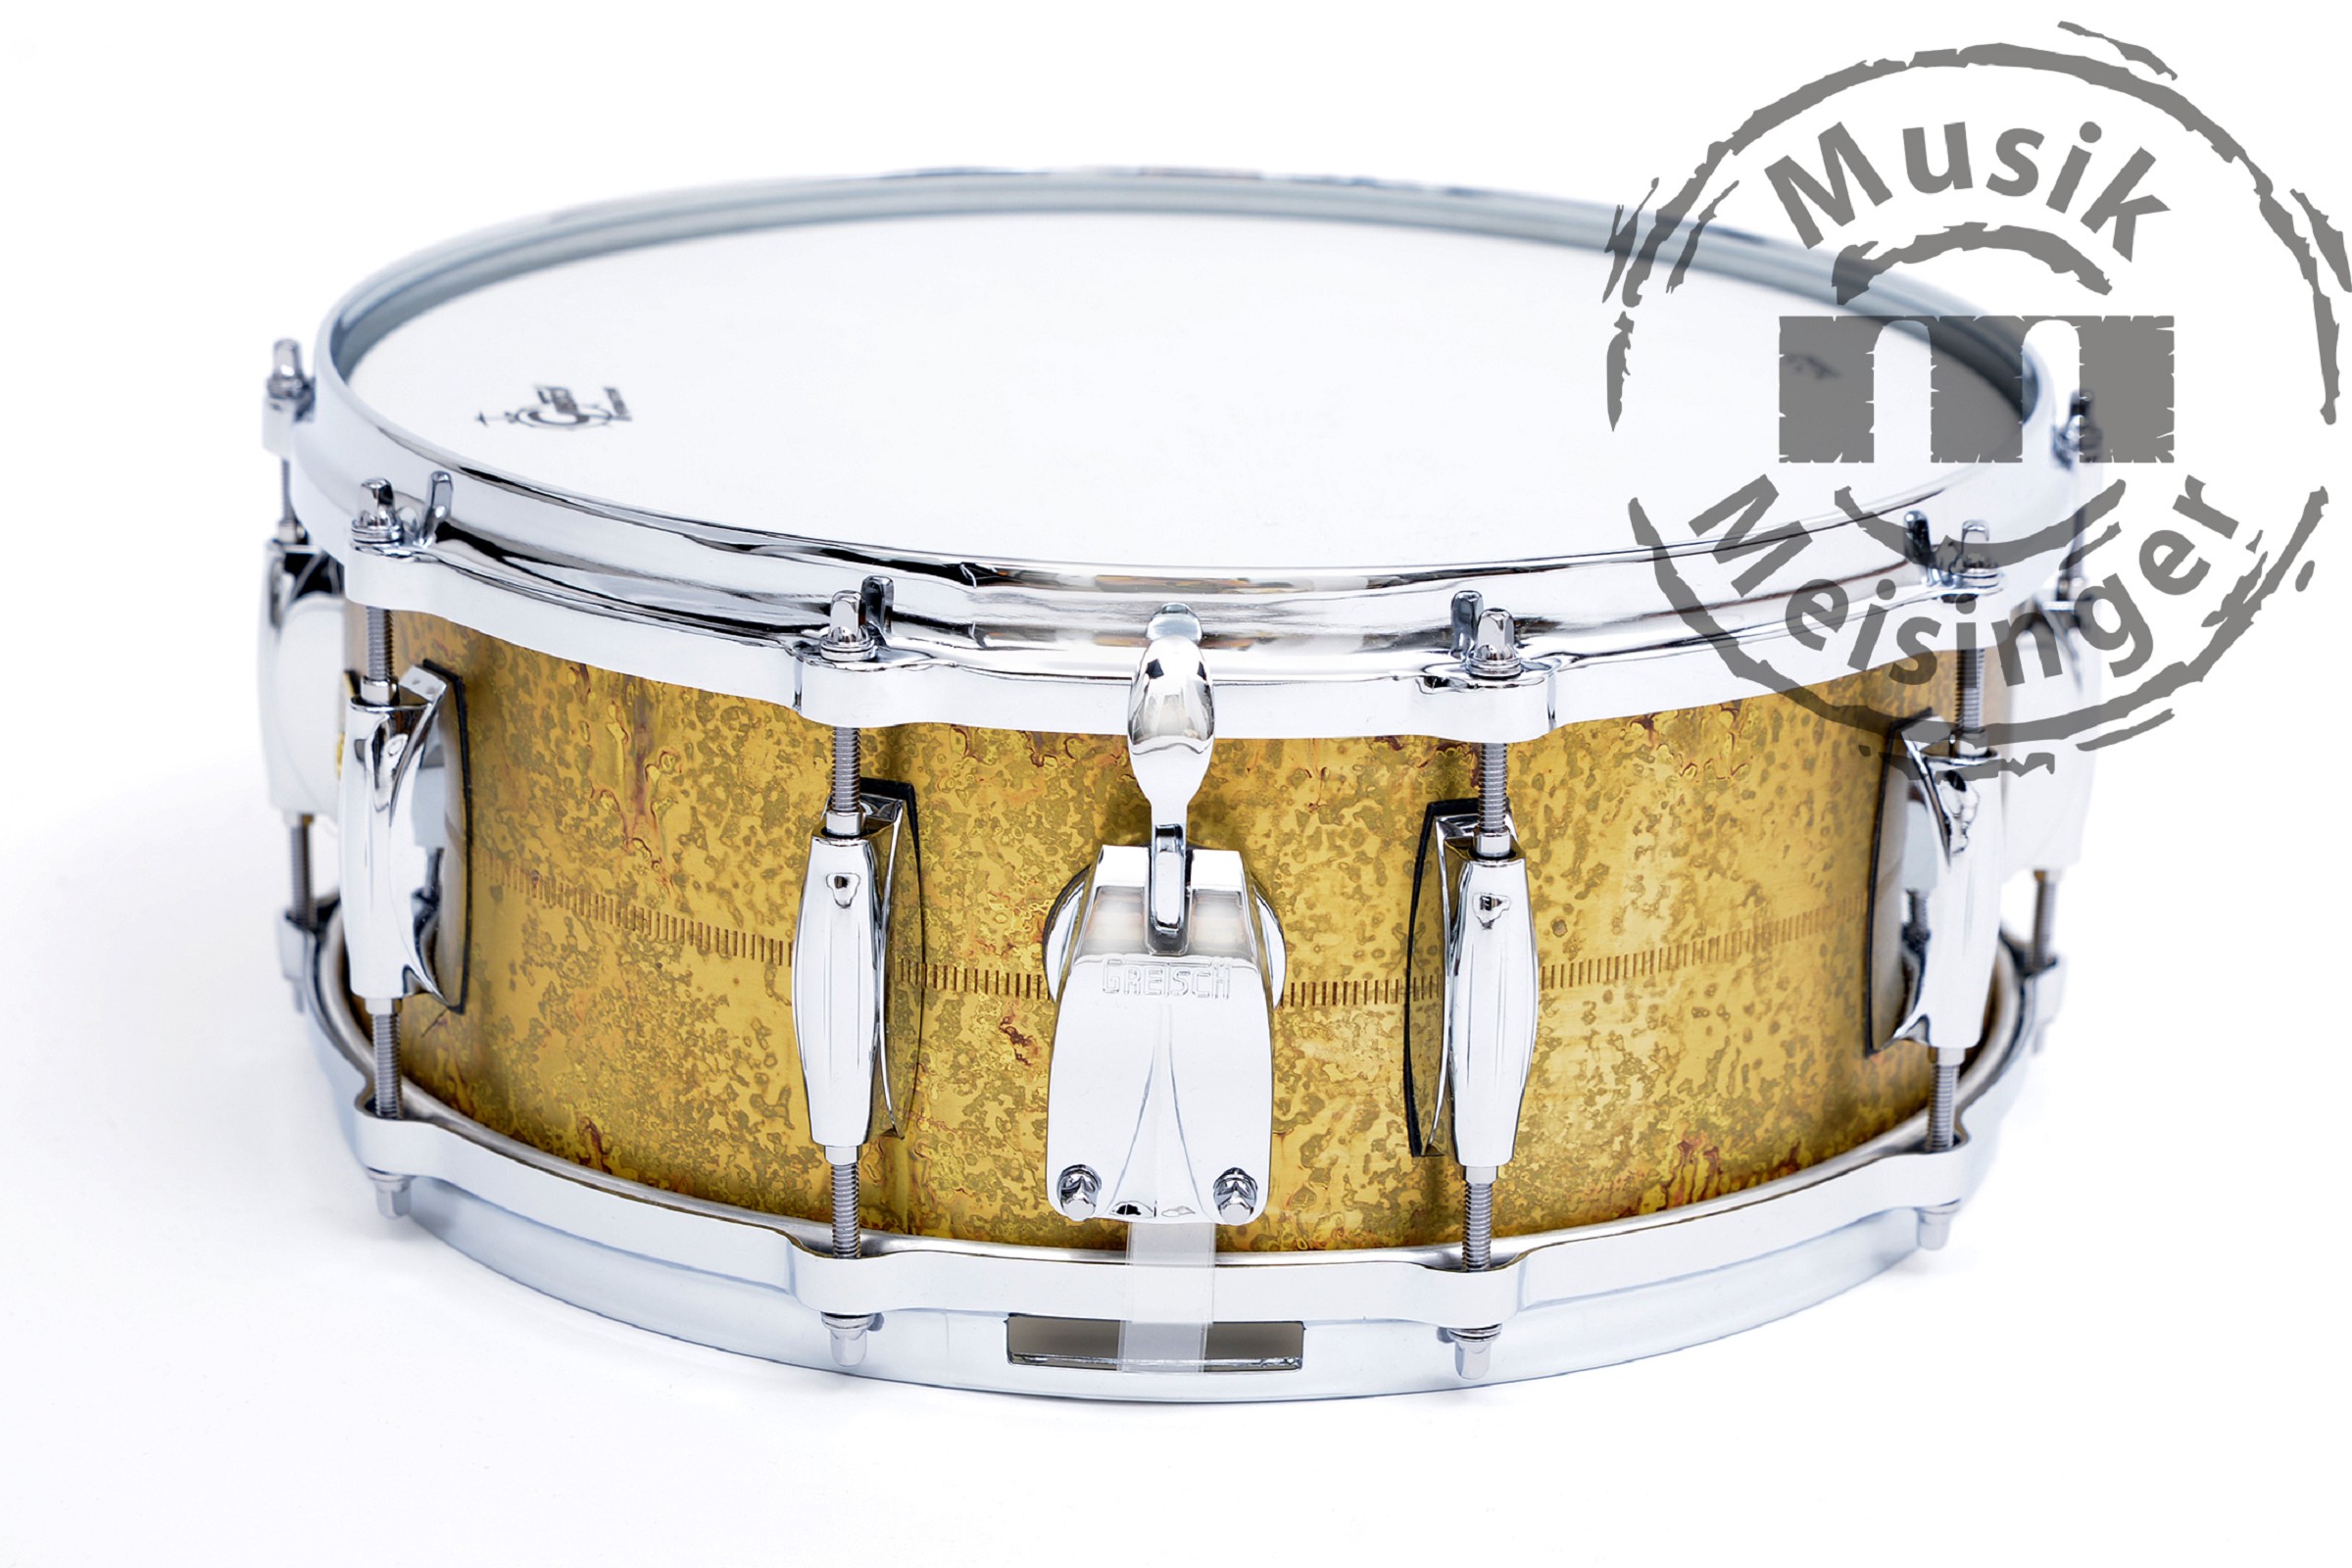 Gretsch USA Keith Carlock Signature Snare Drum